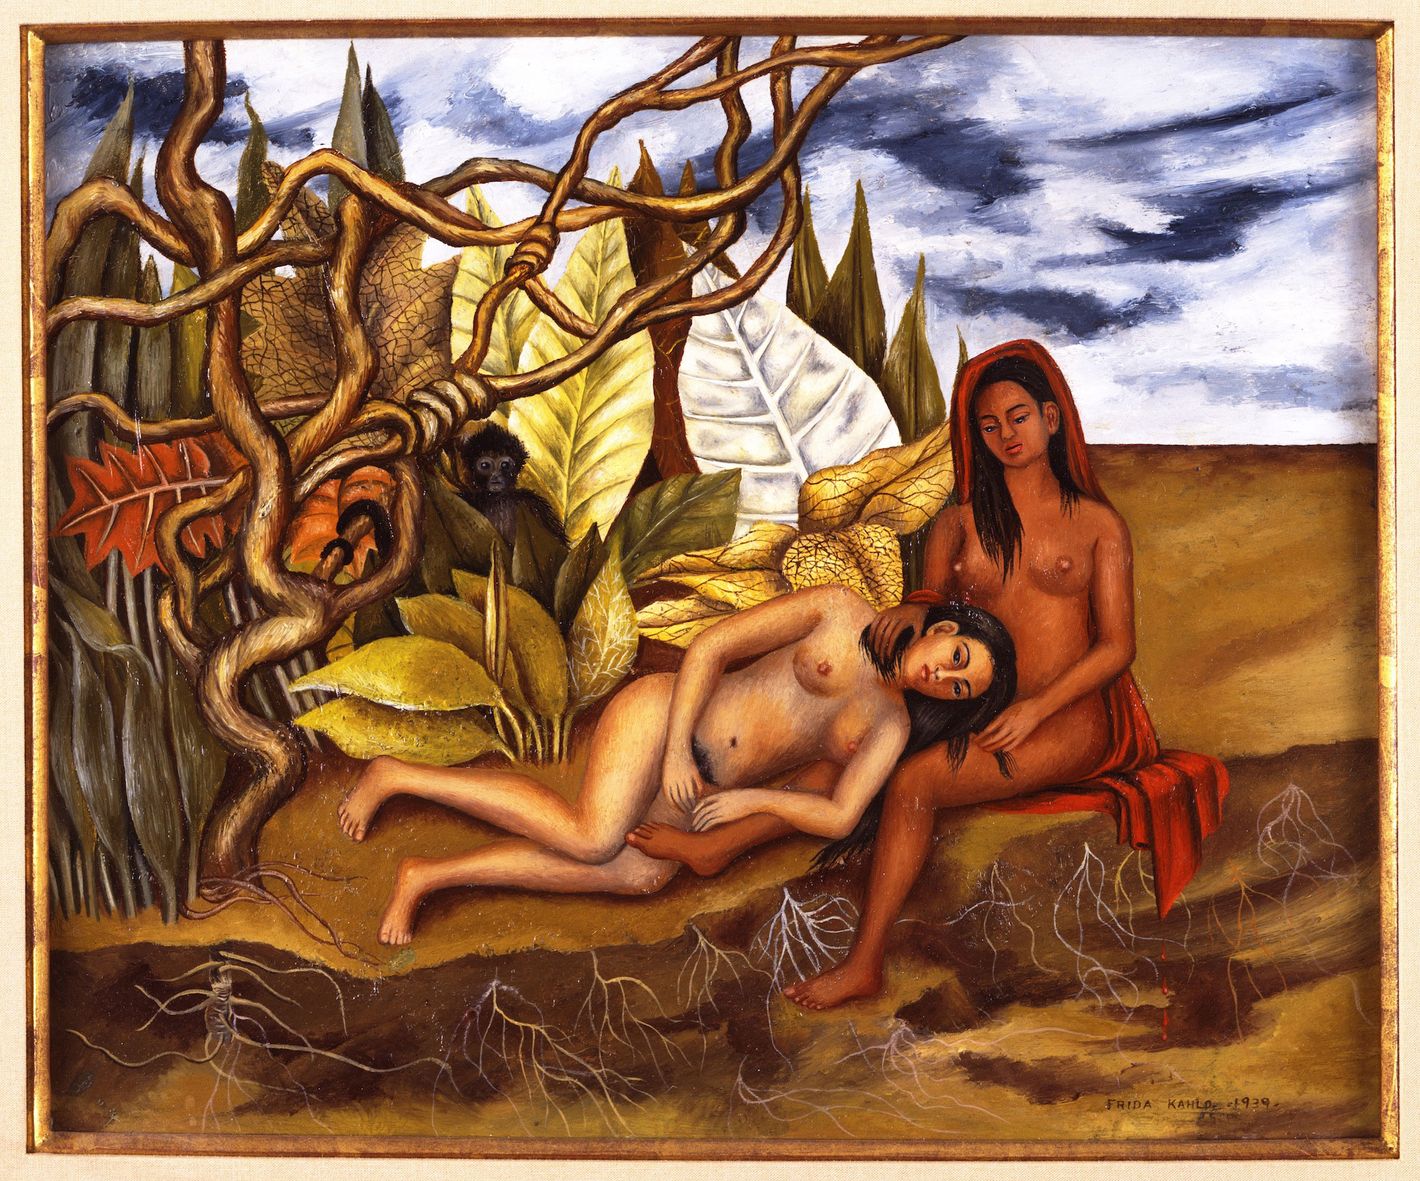 Looking At Frida Kahlos Downright Racy Plant Paintings At The